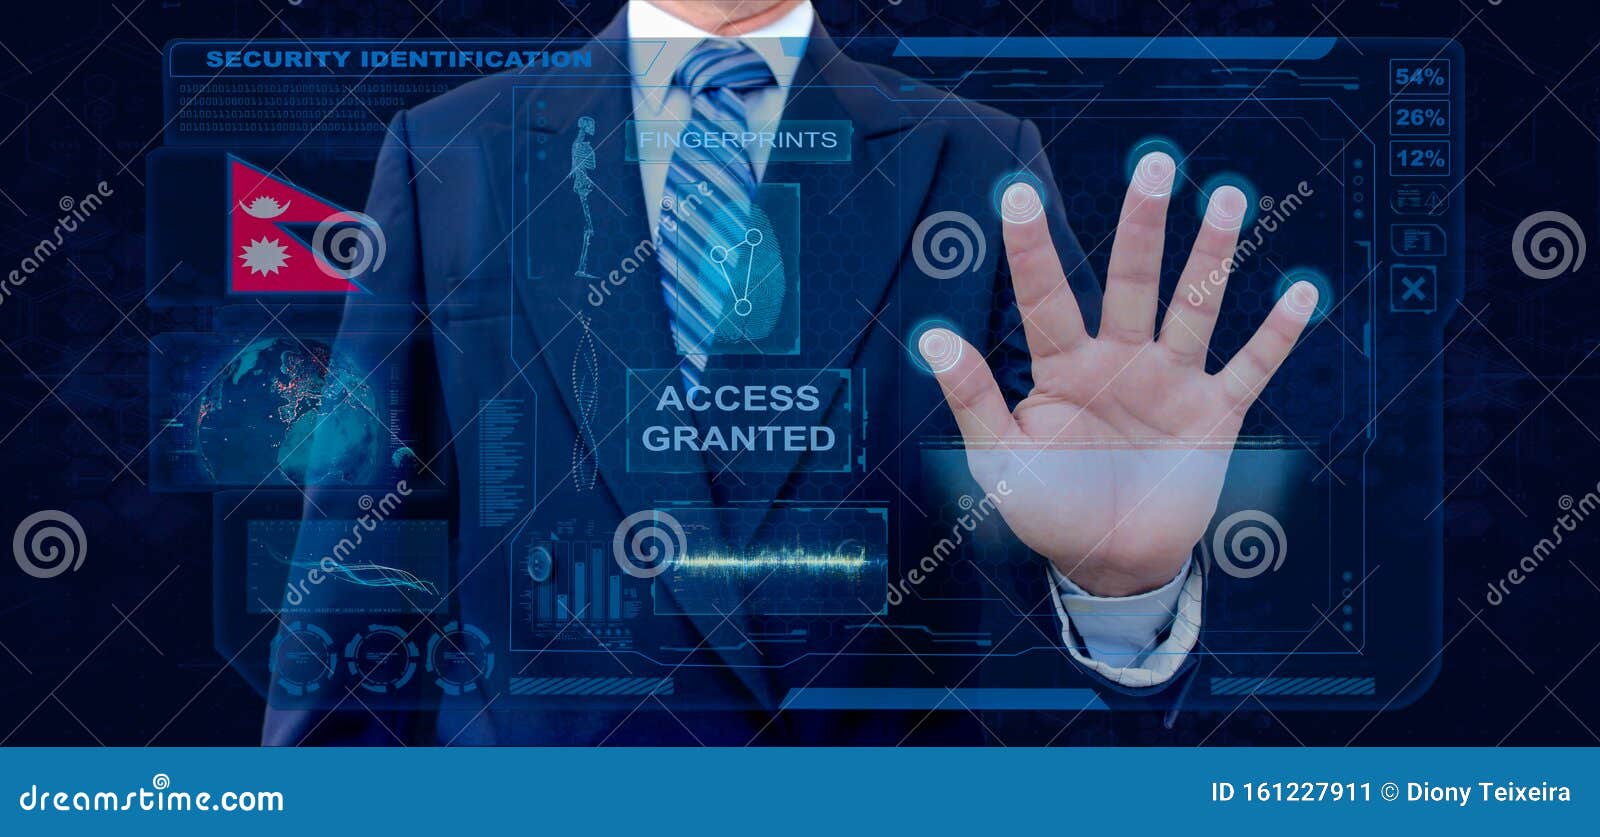 finger print biometric scanning identification system. businessman scan fingerprint biometric identity and approval. nepal